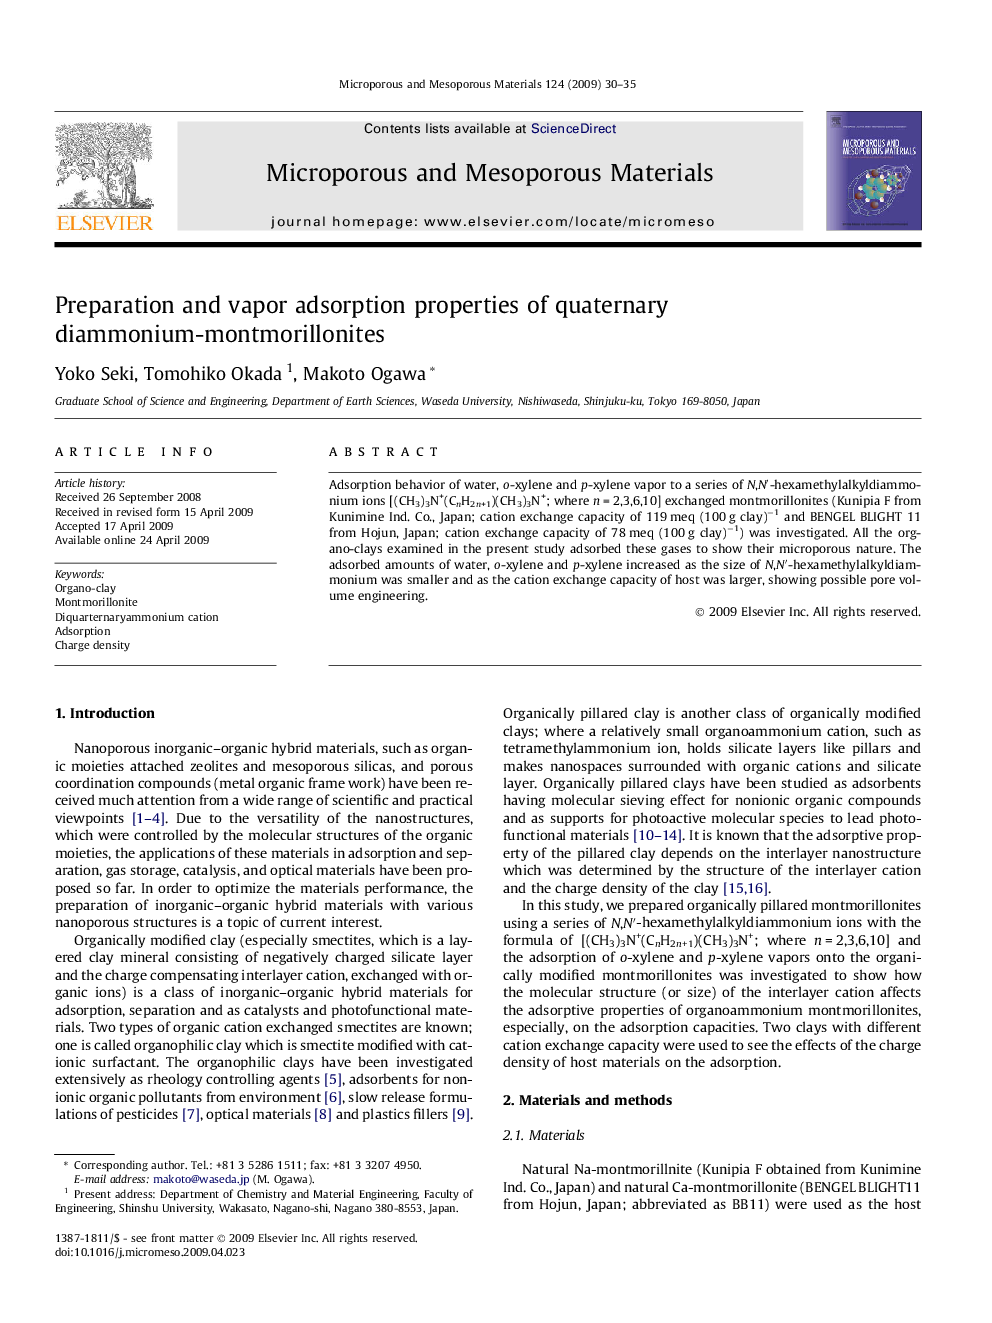 Preparation and vapor adsorption properties of quaternary diammonium-montmorillonites